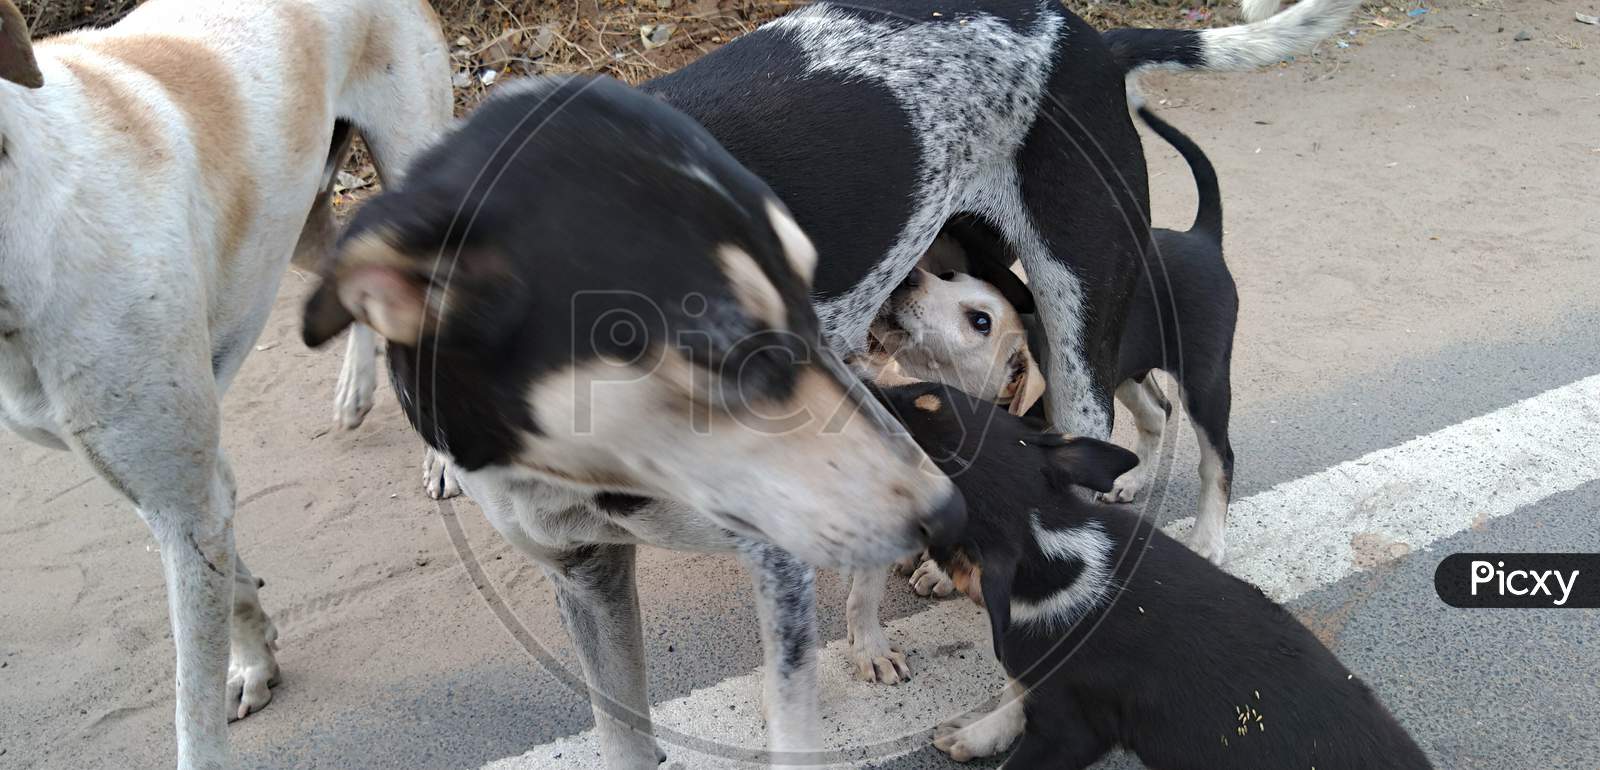 A roadside dog feeding her puppies.